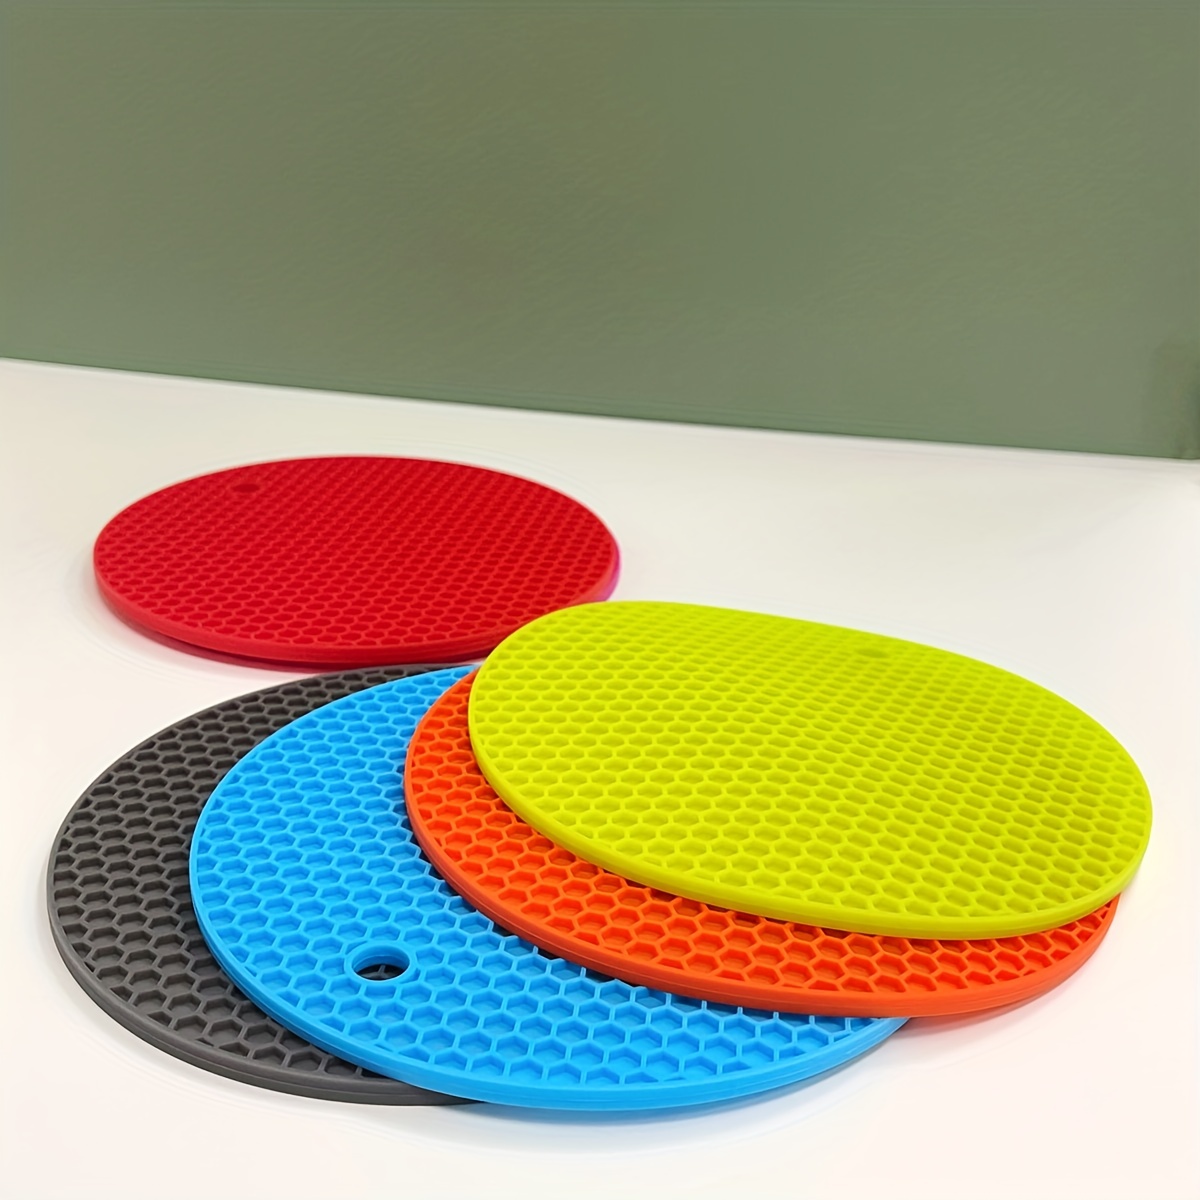 FAIS DU Heat Resistant Silicone Mat Round Pot Holder Table Placemat Kitchen  Accessories Coaster Food Grade Material Placemat - AliExpress